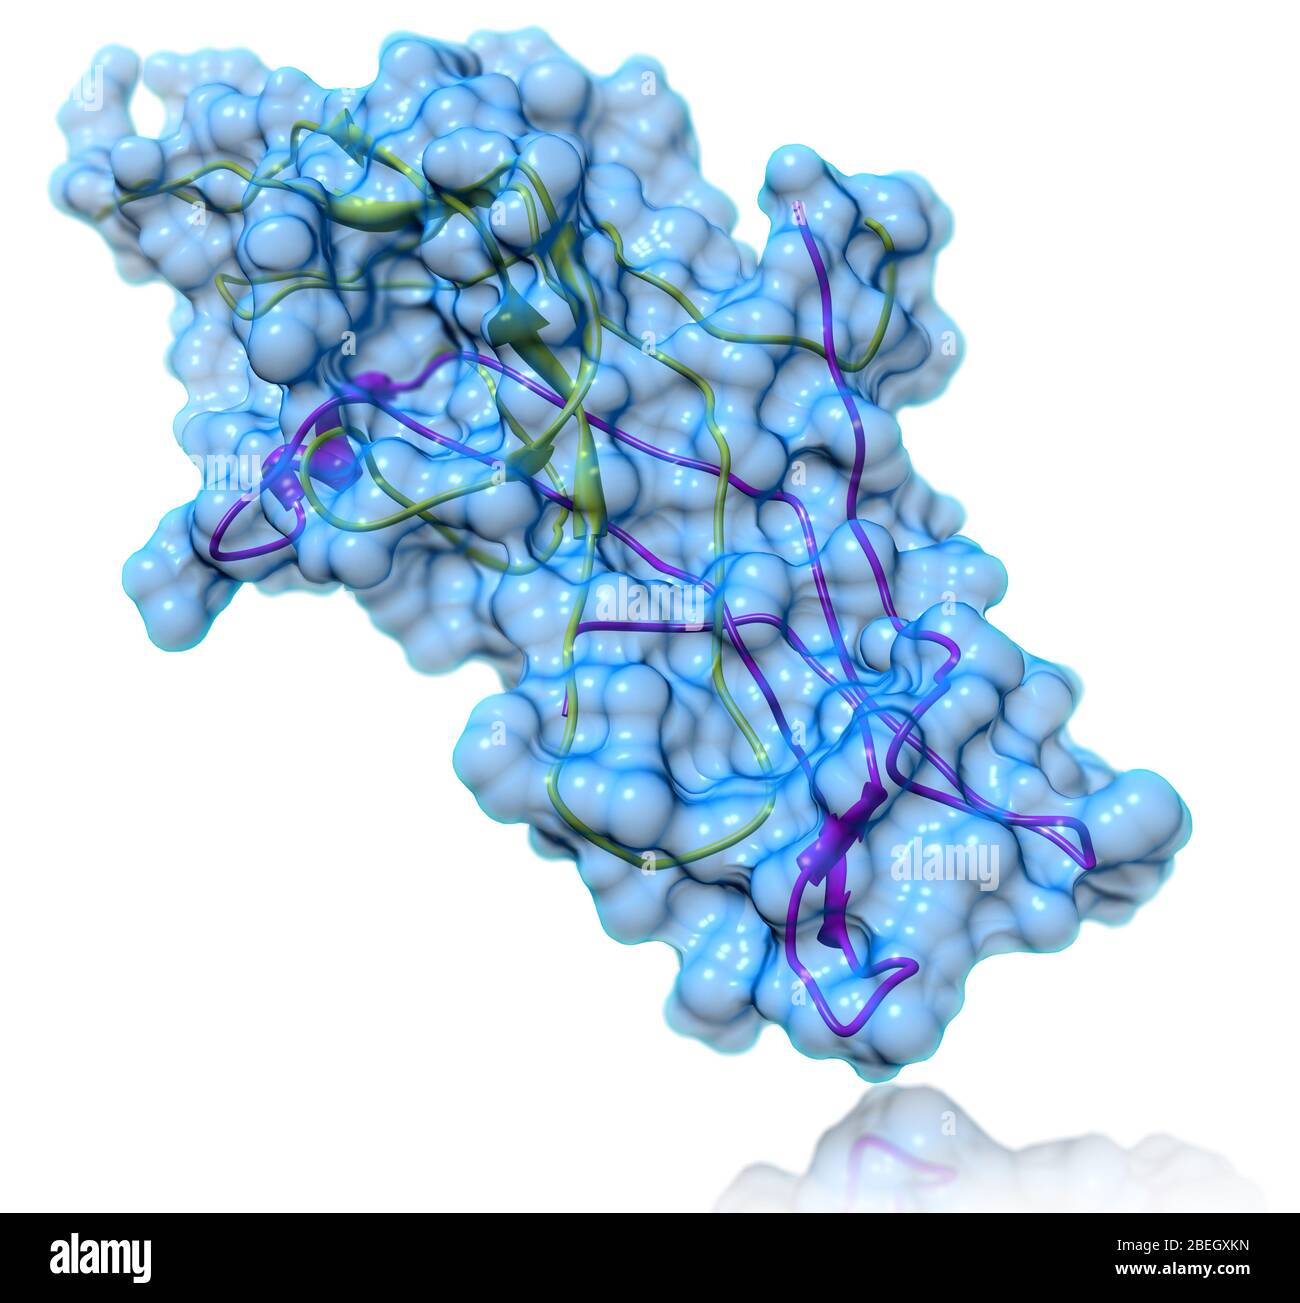 Human Chorionic Gonadotropin Molecular Model Stock Photo